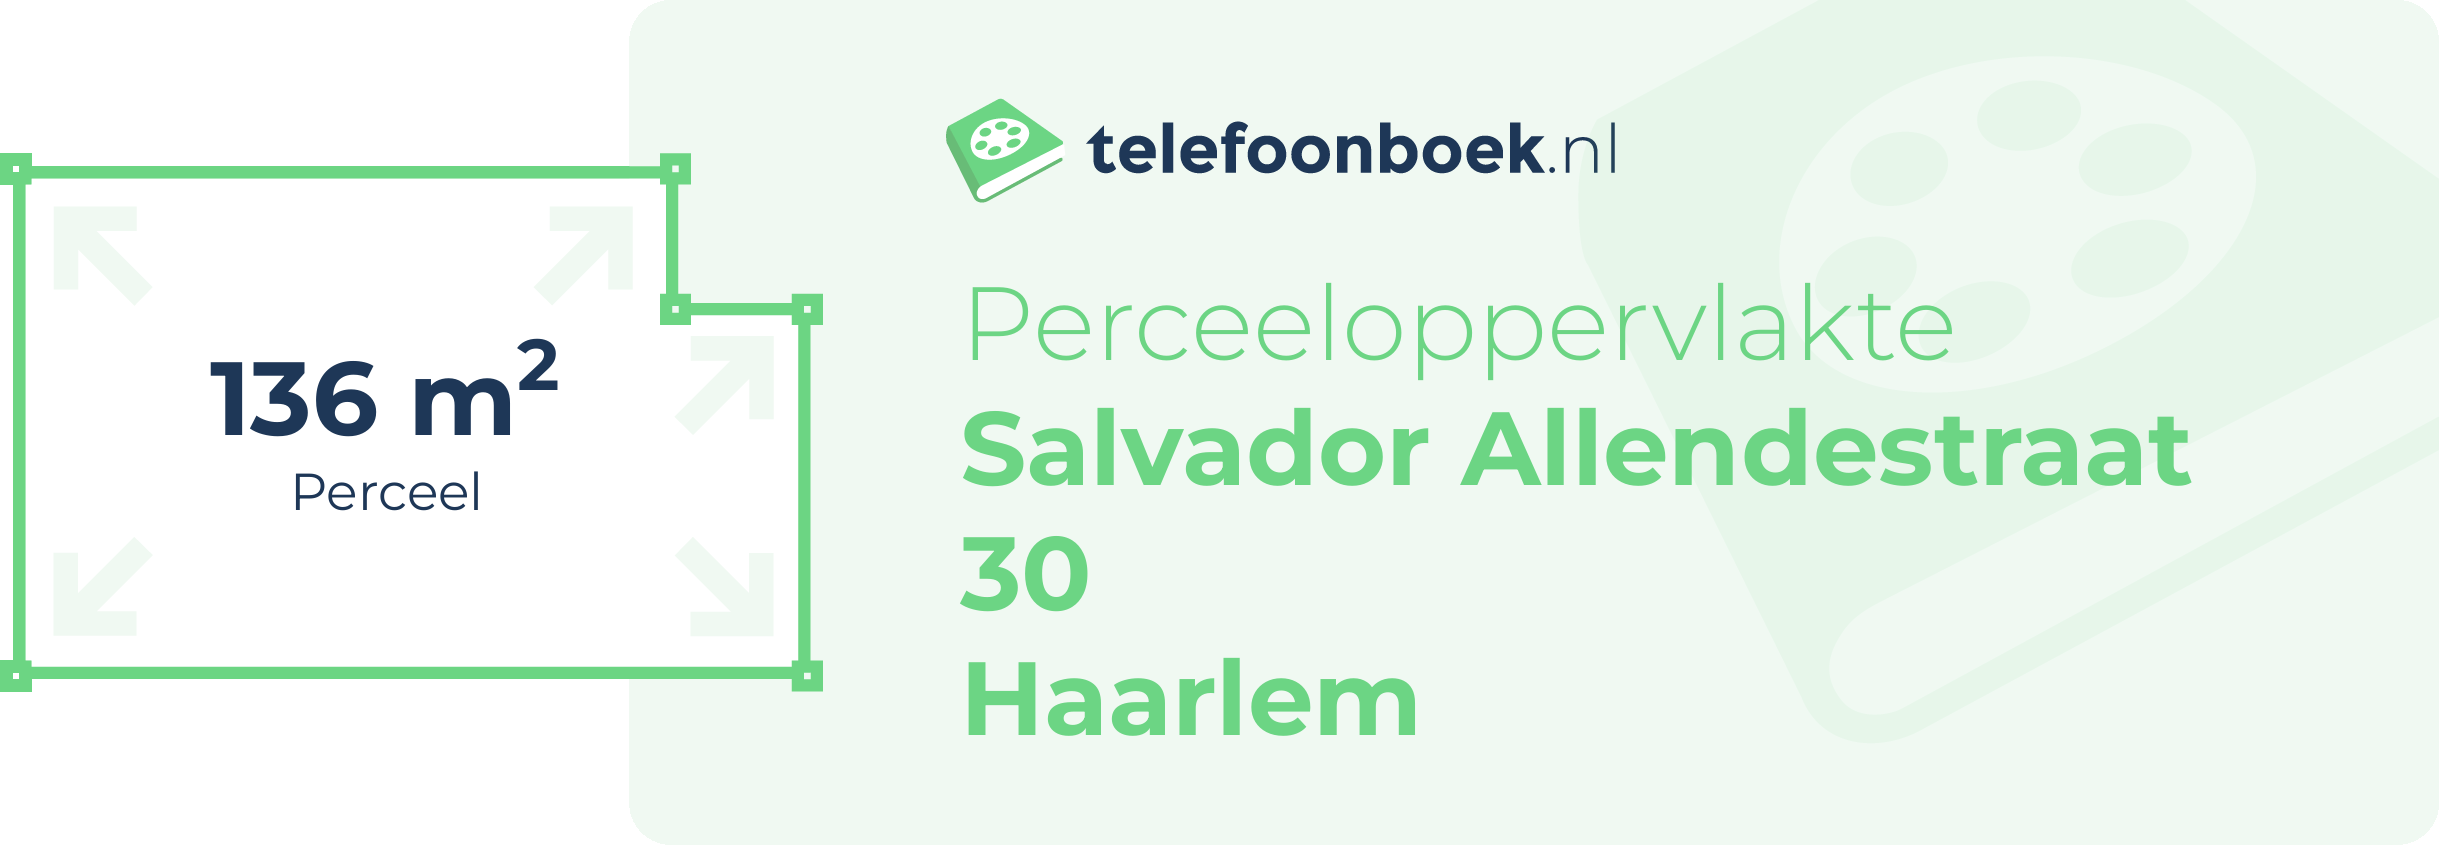 Perceeloppervlakte Salvador Allendestraat 30 Haarlem